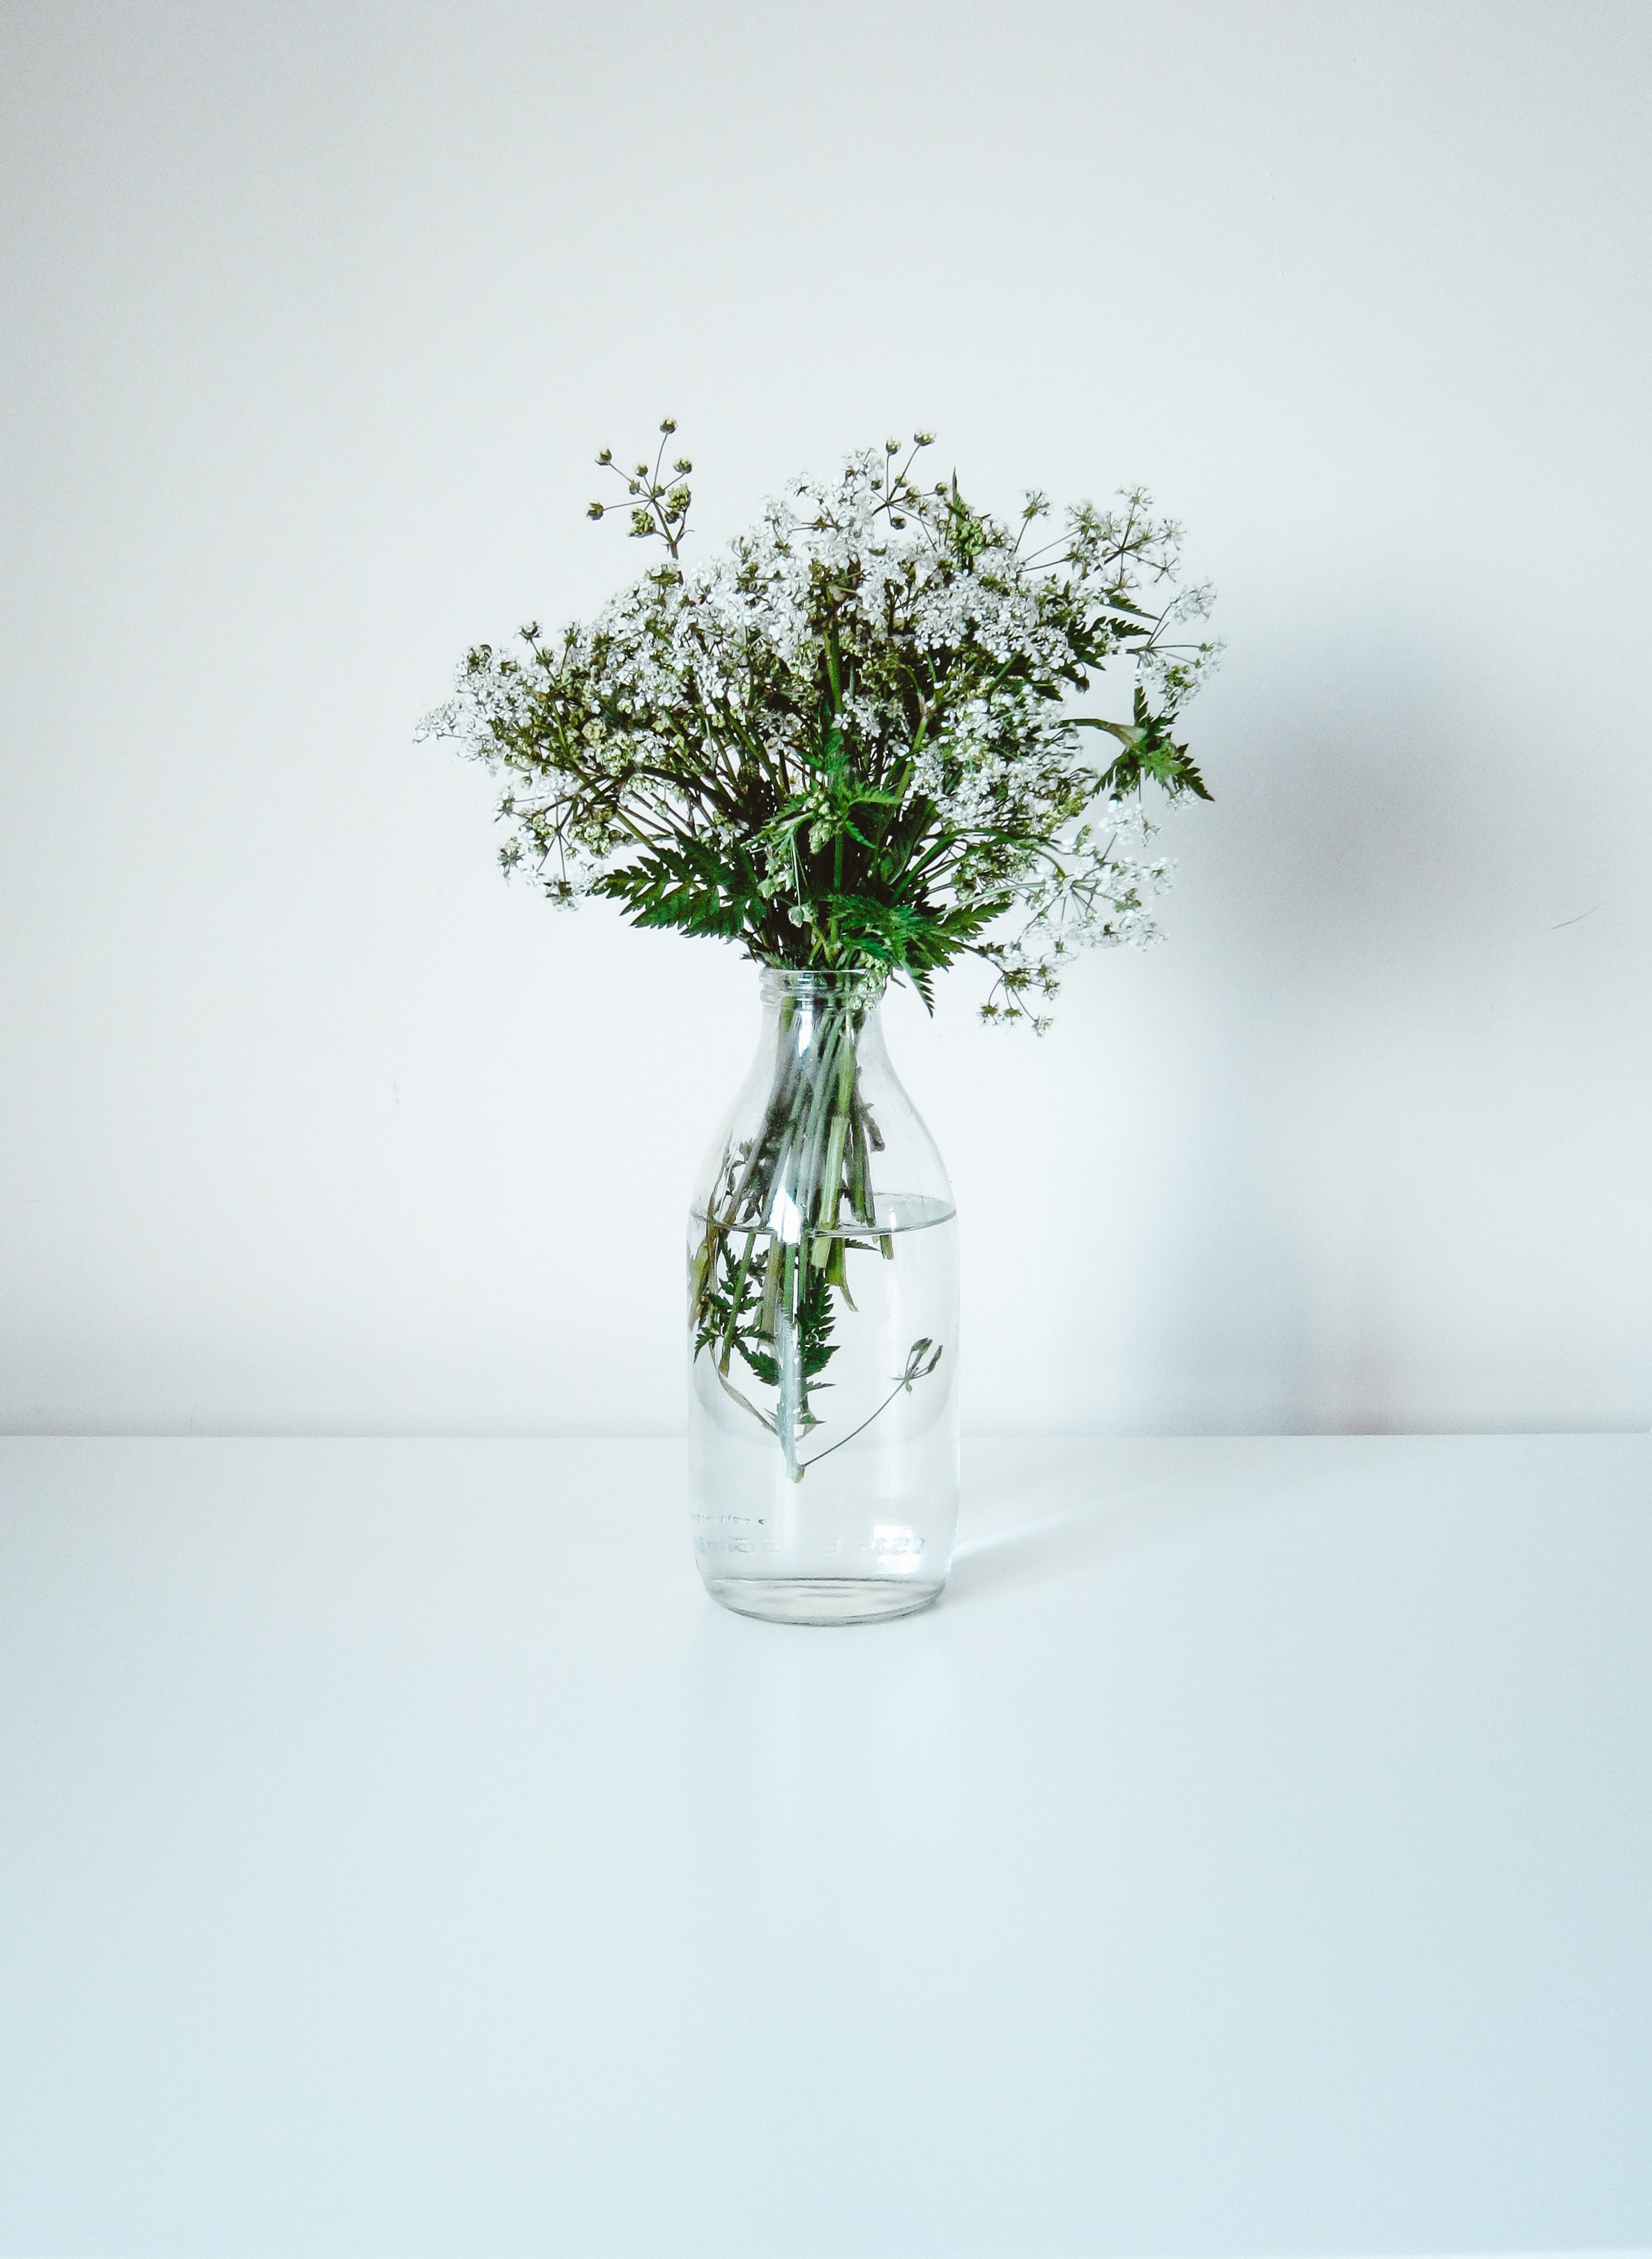 wildflowers, flowers, white, minimalism, bouquet